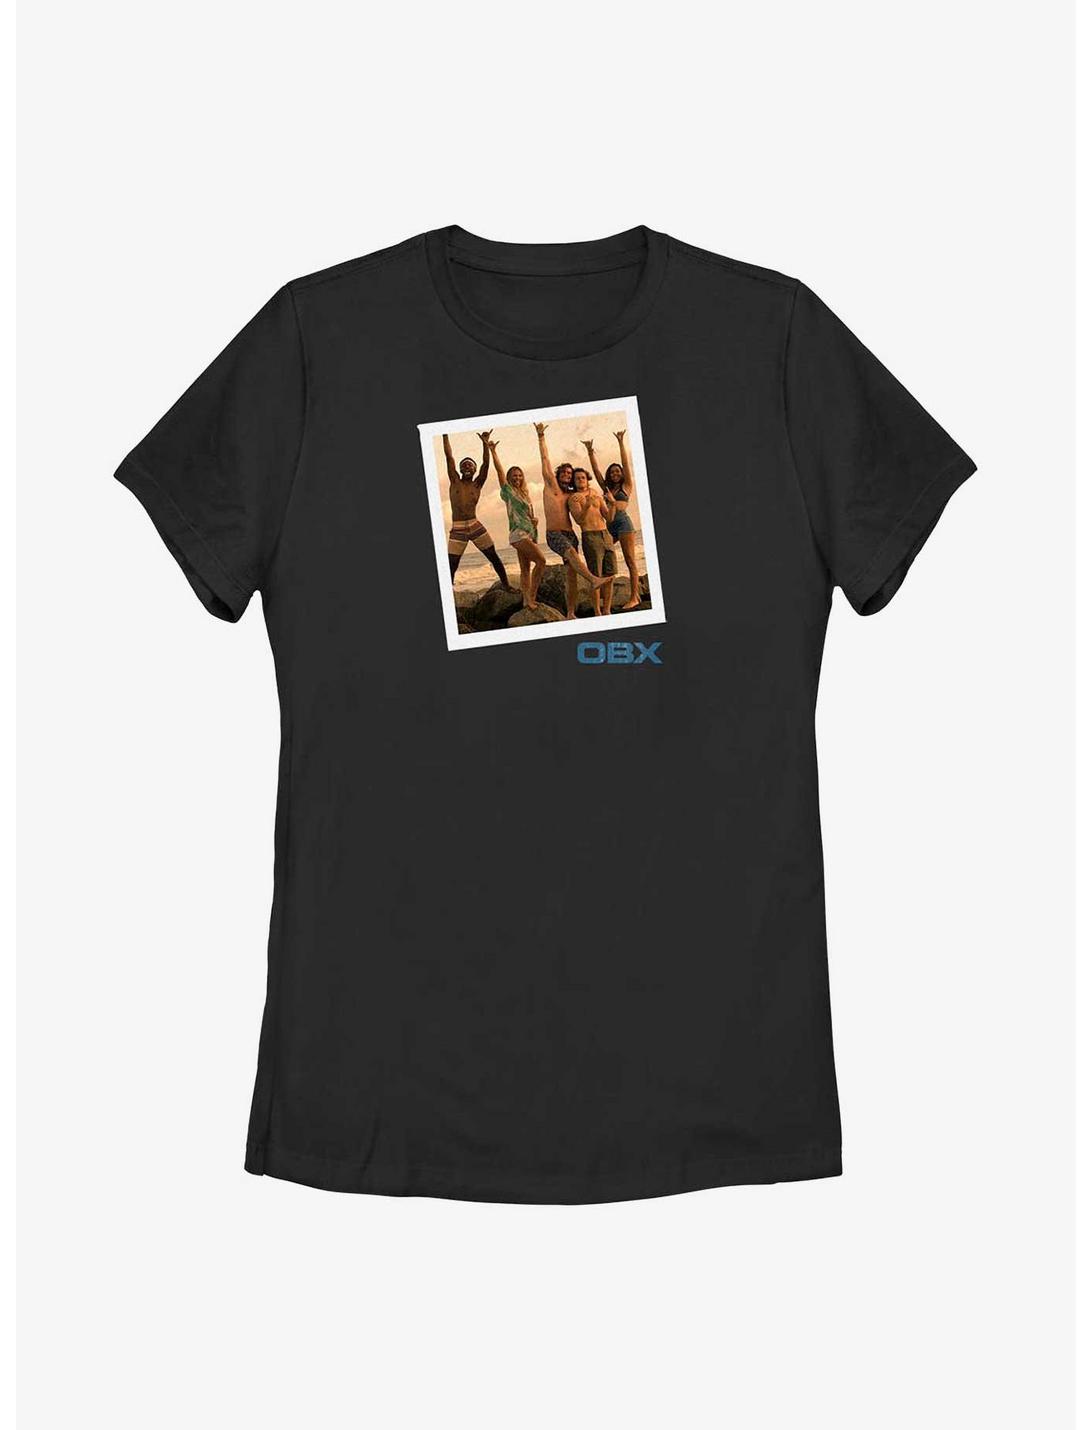 Outer Banks Group Photo Womens T-Shirt, BLACK, hi-res